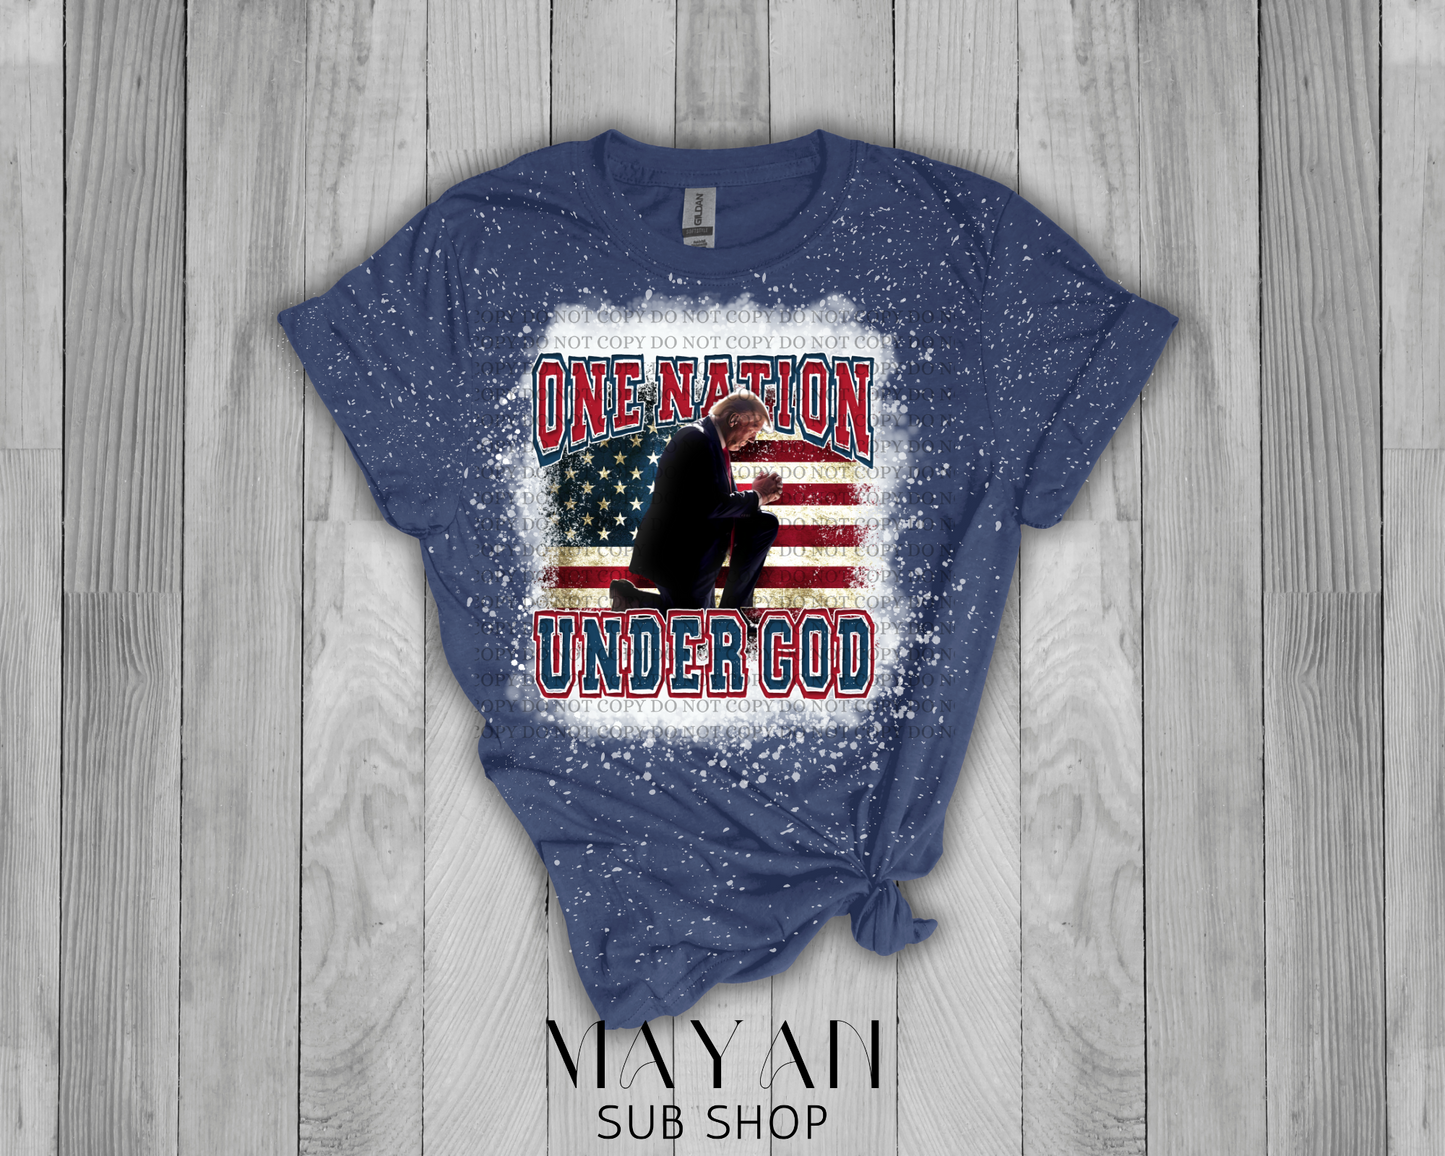 One Nation Under God Bleached Shirt - Mayan Sub Shop